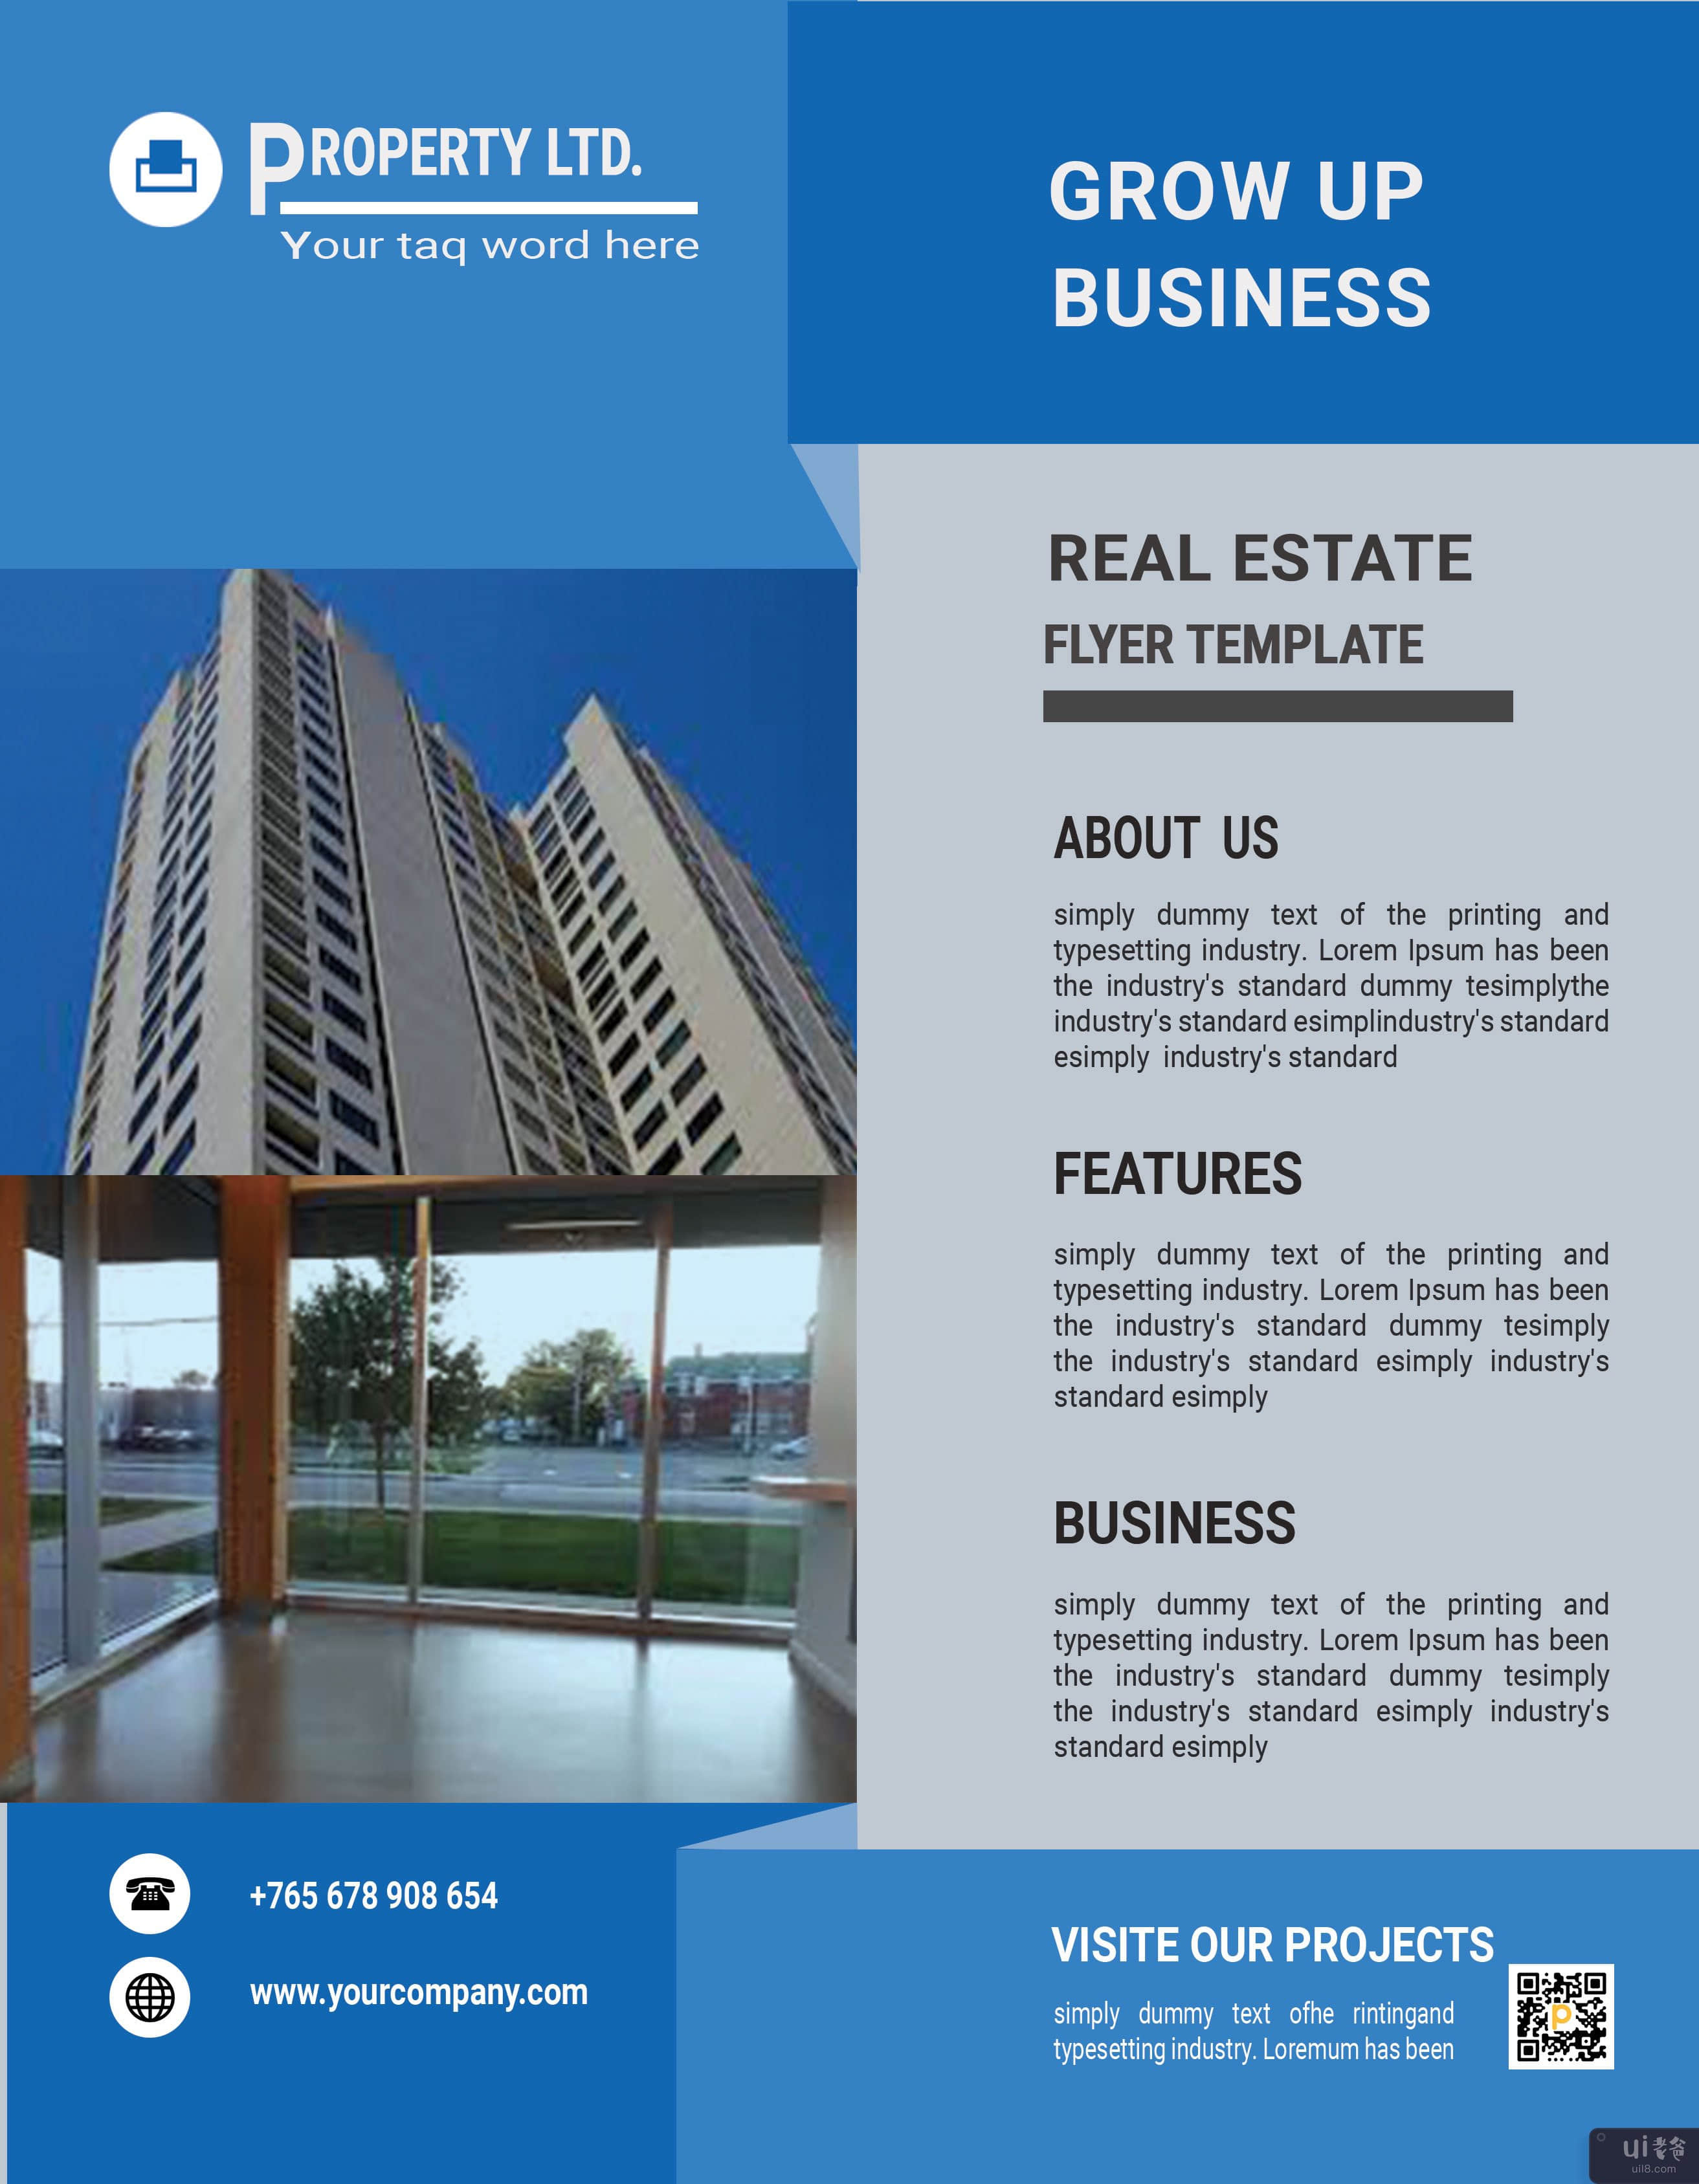 优雅的企业房地产传单模板(Elegant Corporate Real Estate Flyer Template)插图3